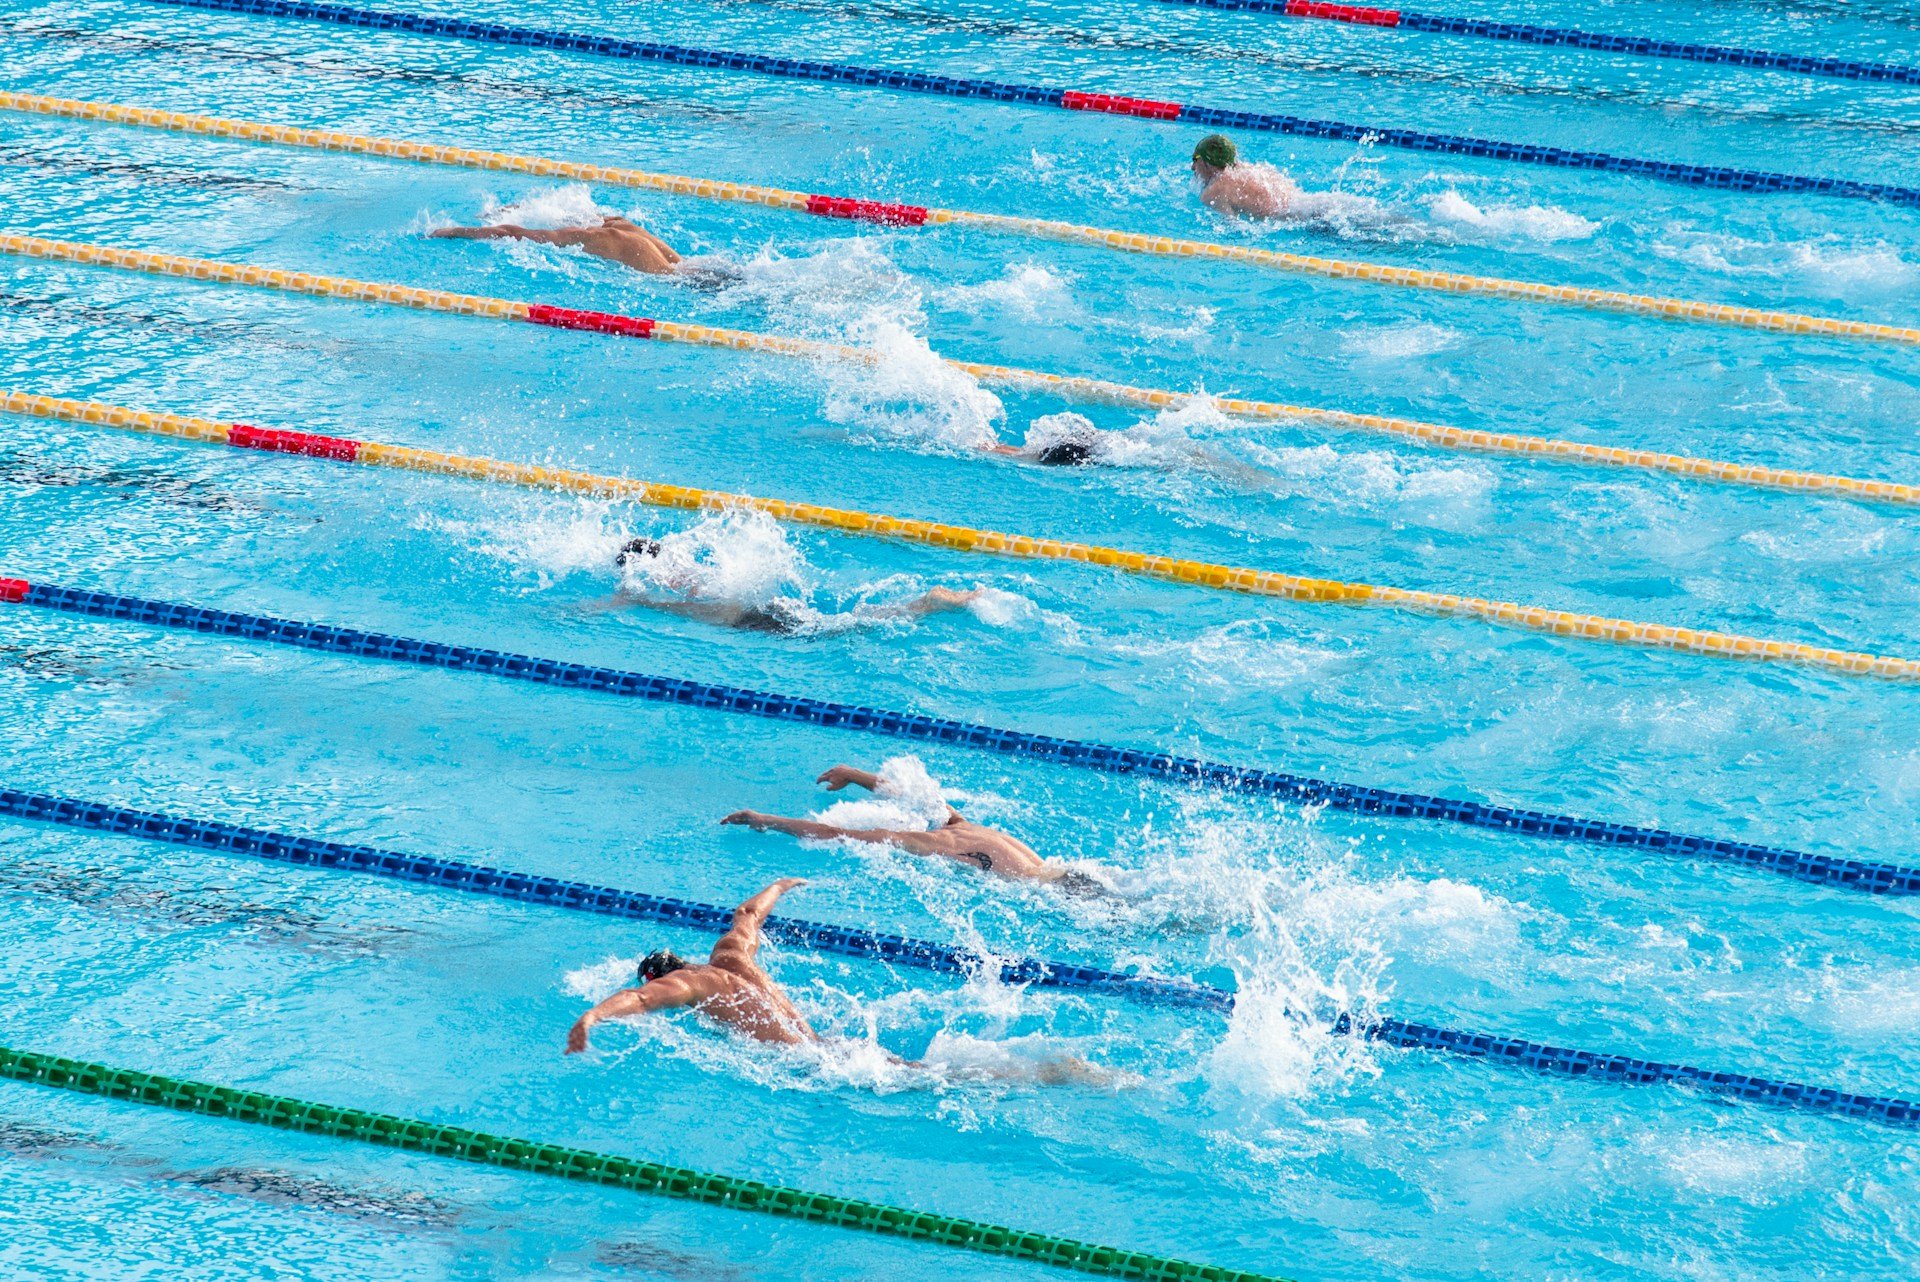 Veliki skandal: Čak 23 plivača bila su pozitivna na zabranjeni lijek prije Olimpijskih igara